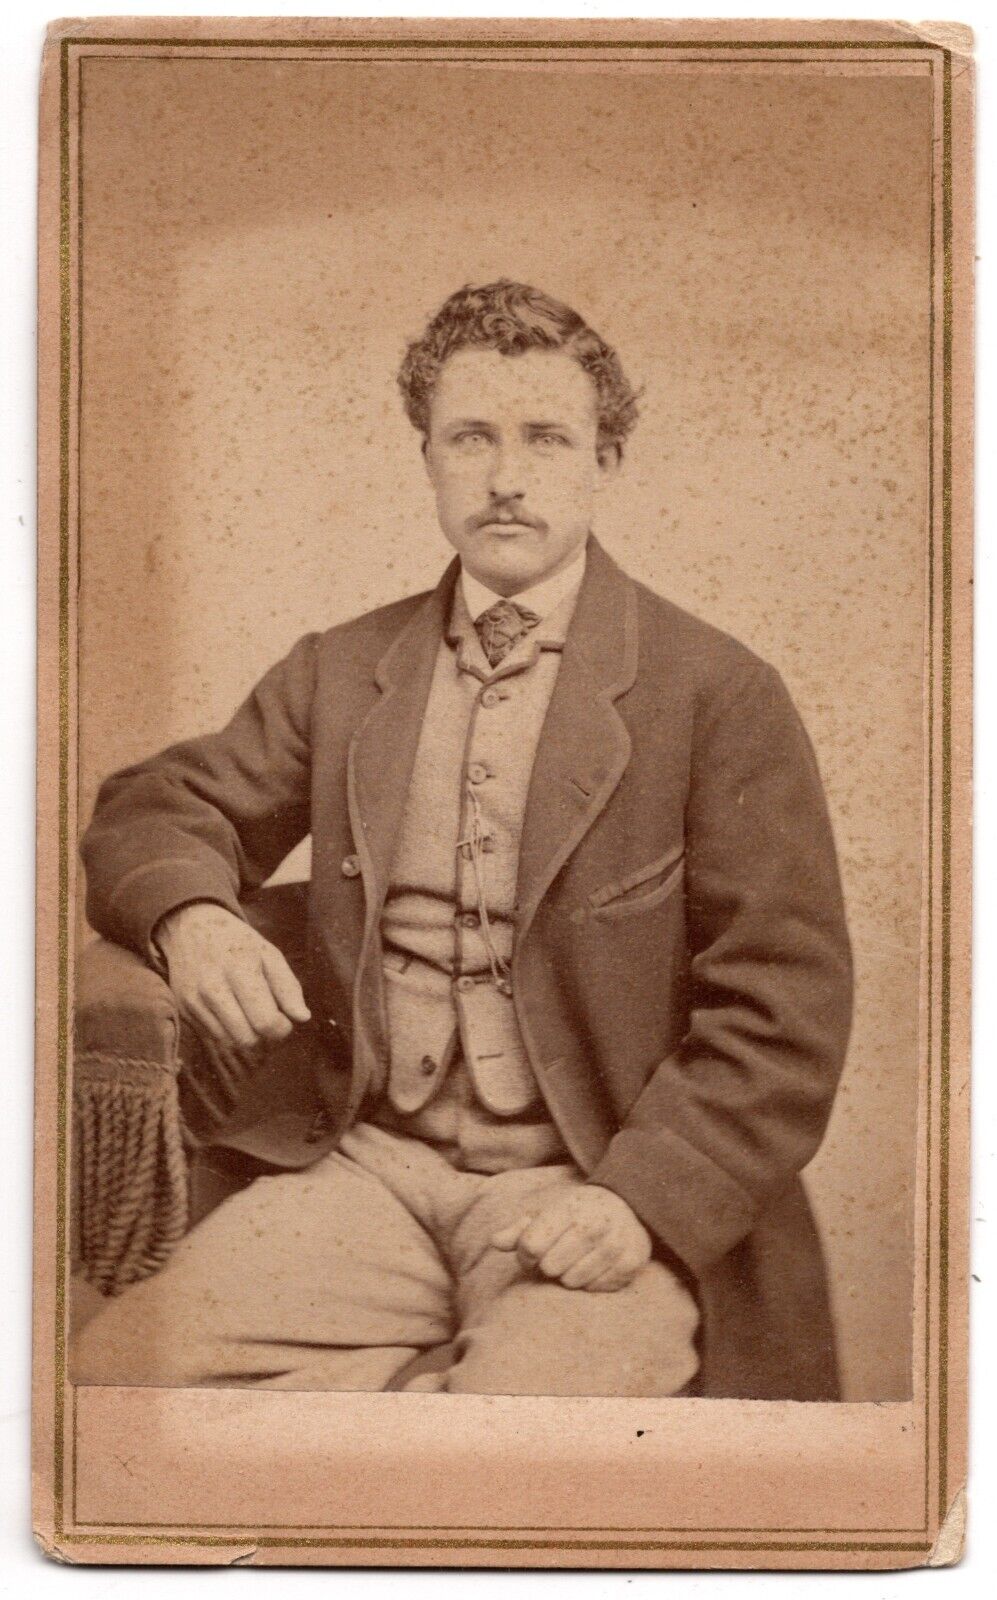 ANTIQUE CDV CIRCA 1860s E.G. ROLLINS HANDSOME MAN WITH MUSTACHE GLOUCESTER MA.